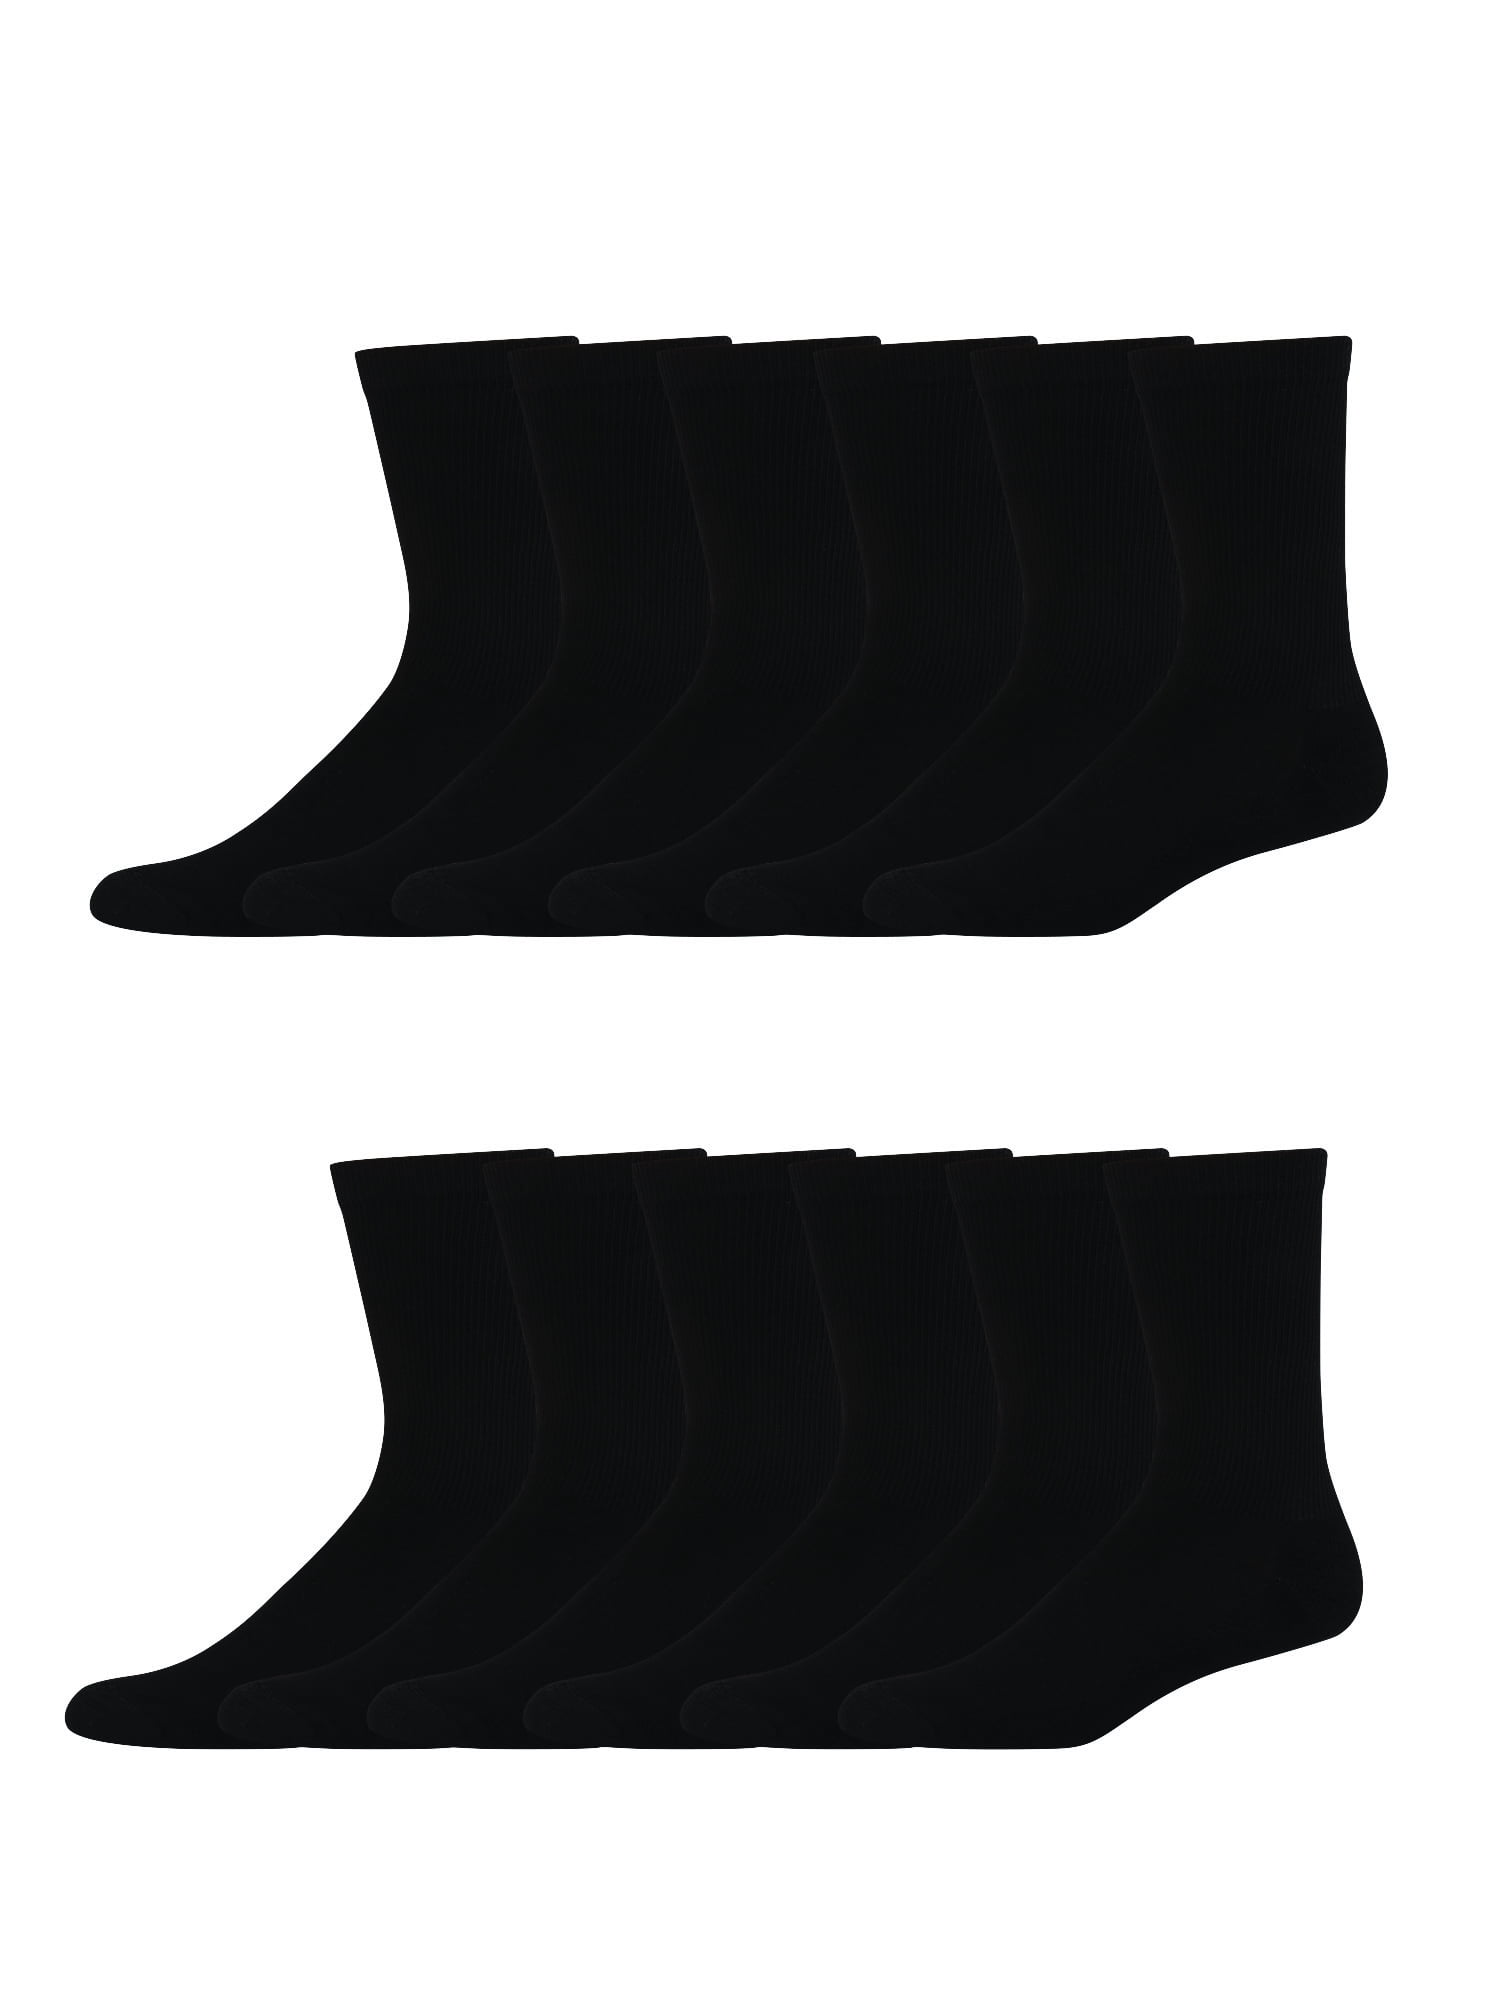 12-14 13-15 Sock Hanes Men's Big and Tall Active Cool 12-Pack Crew Socks Black,BIG Shoe